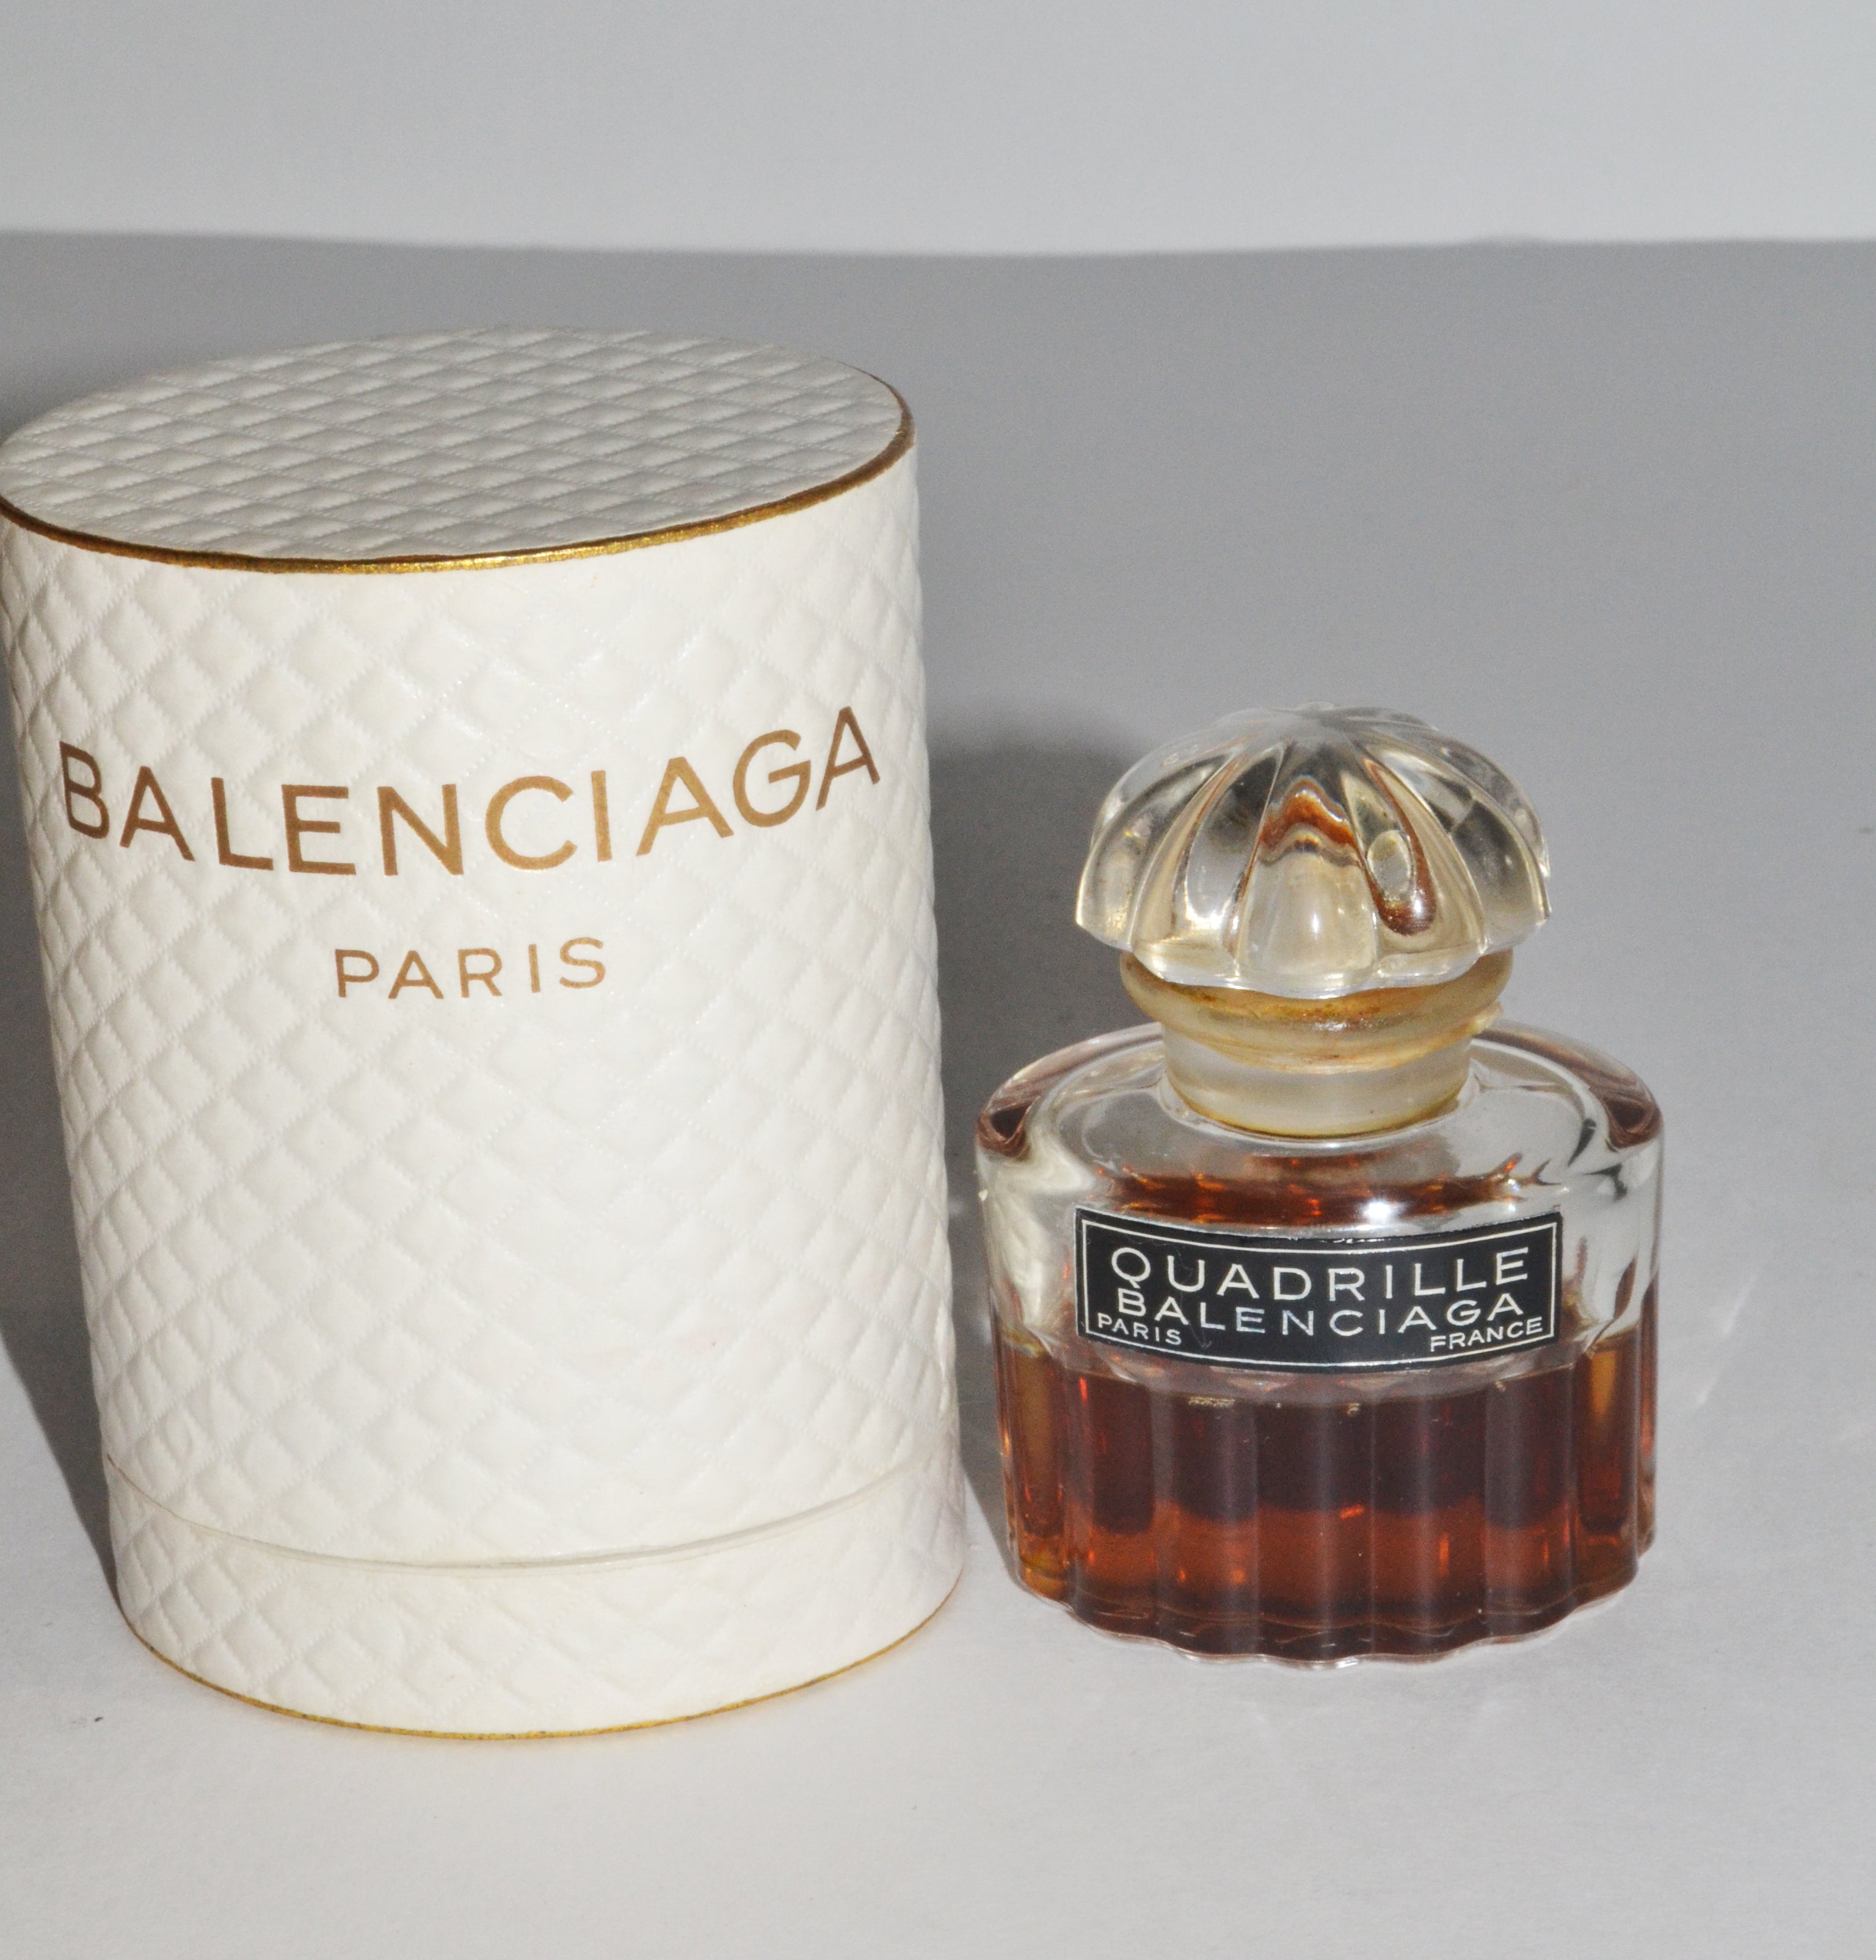 vintage balenciaga perfume